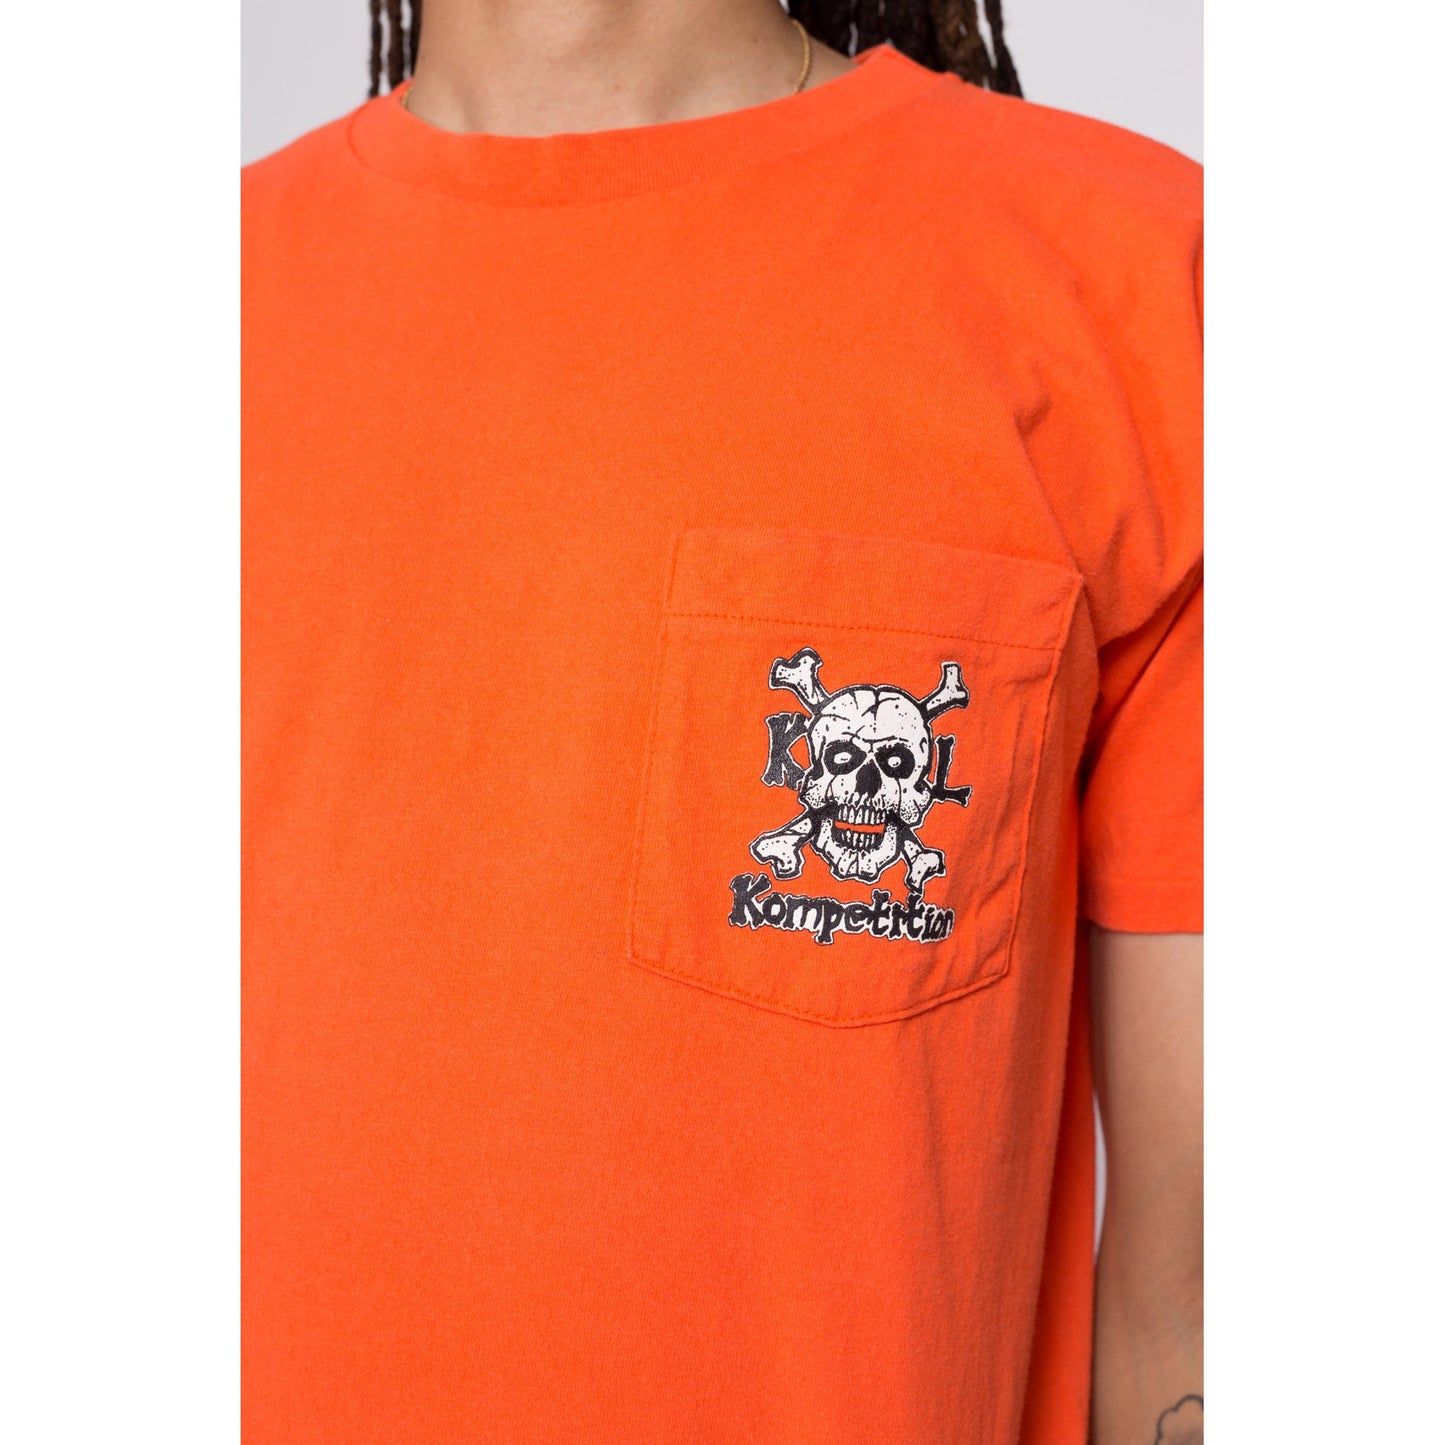 90s Nitro Harley Drag Bike Skull T Shirt - Men's Large | Vintage Orange Kool Kompetition Biker Racing Graphic Tee